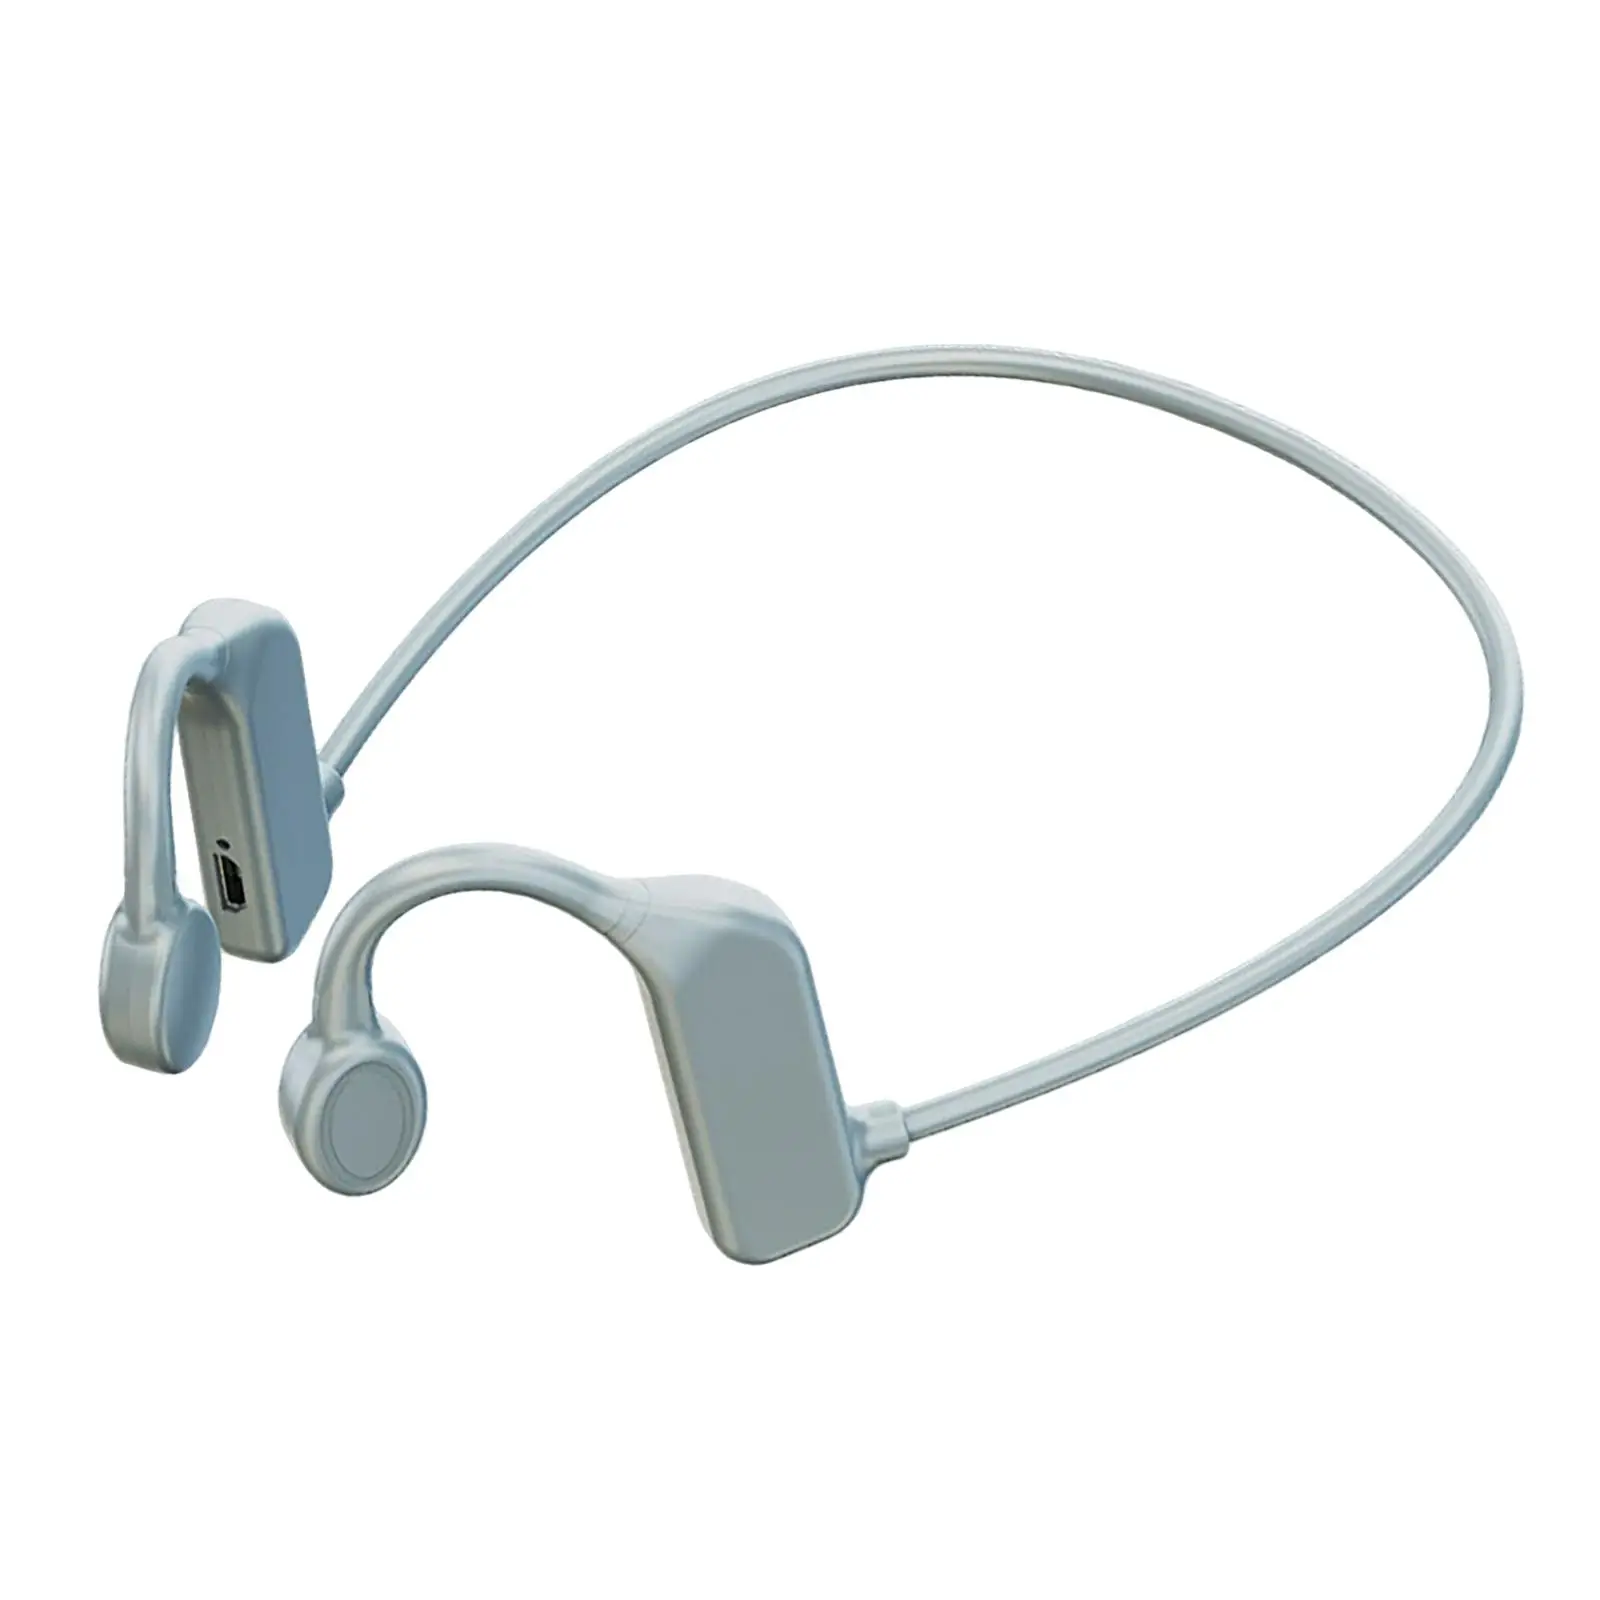 Open Ear Bone Conduction Headphones Bluetooth Earphones for Running Cycling